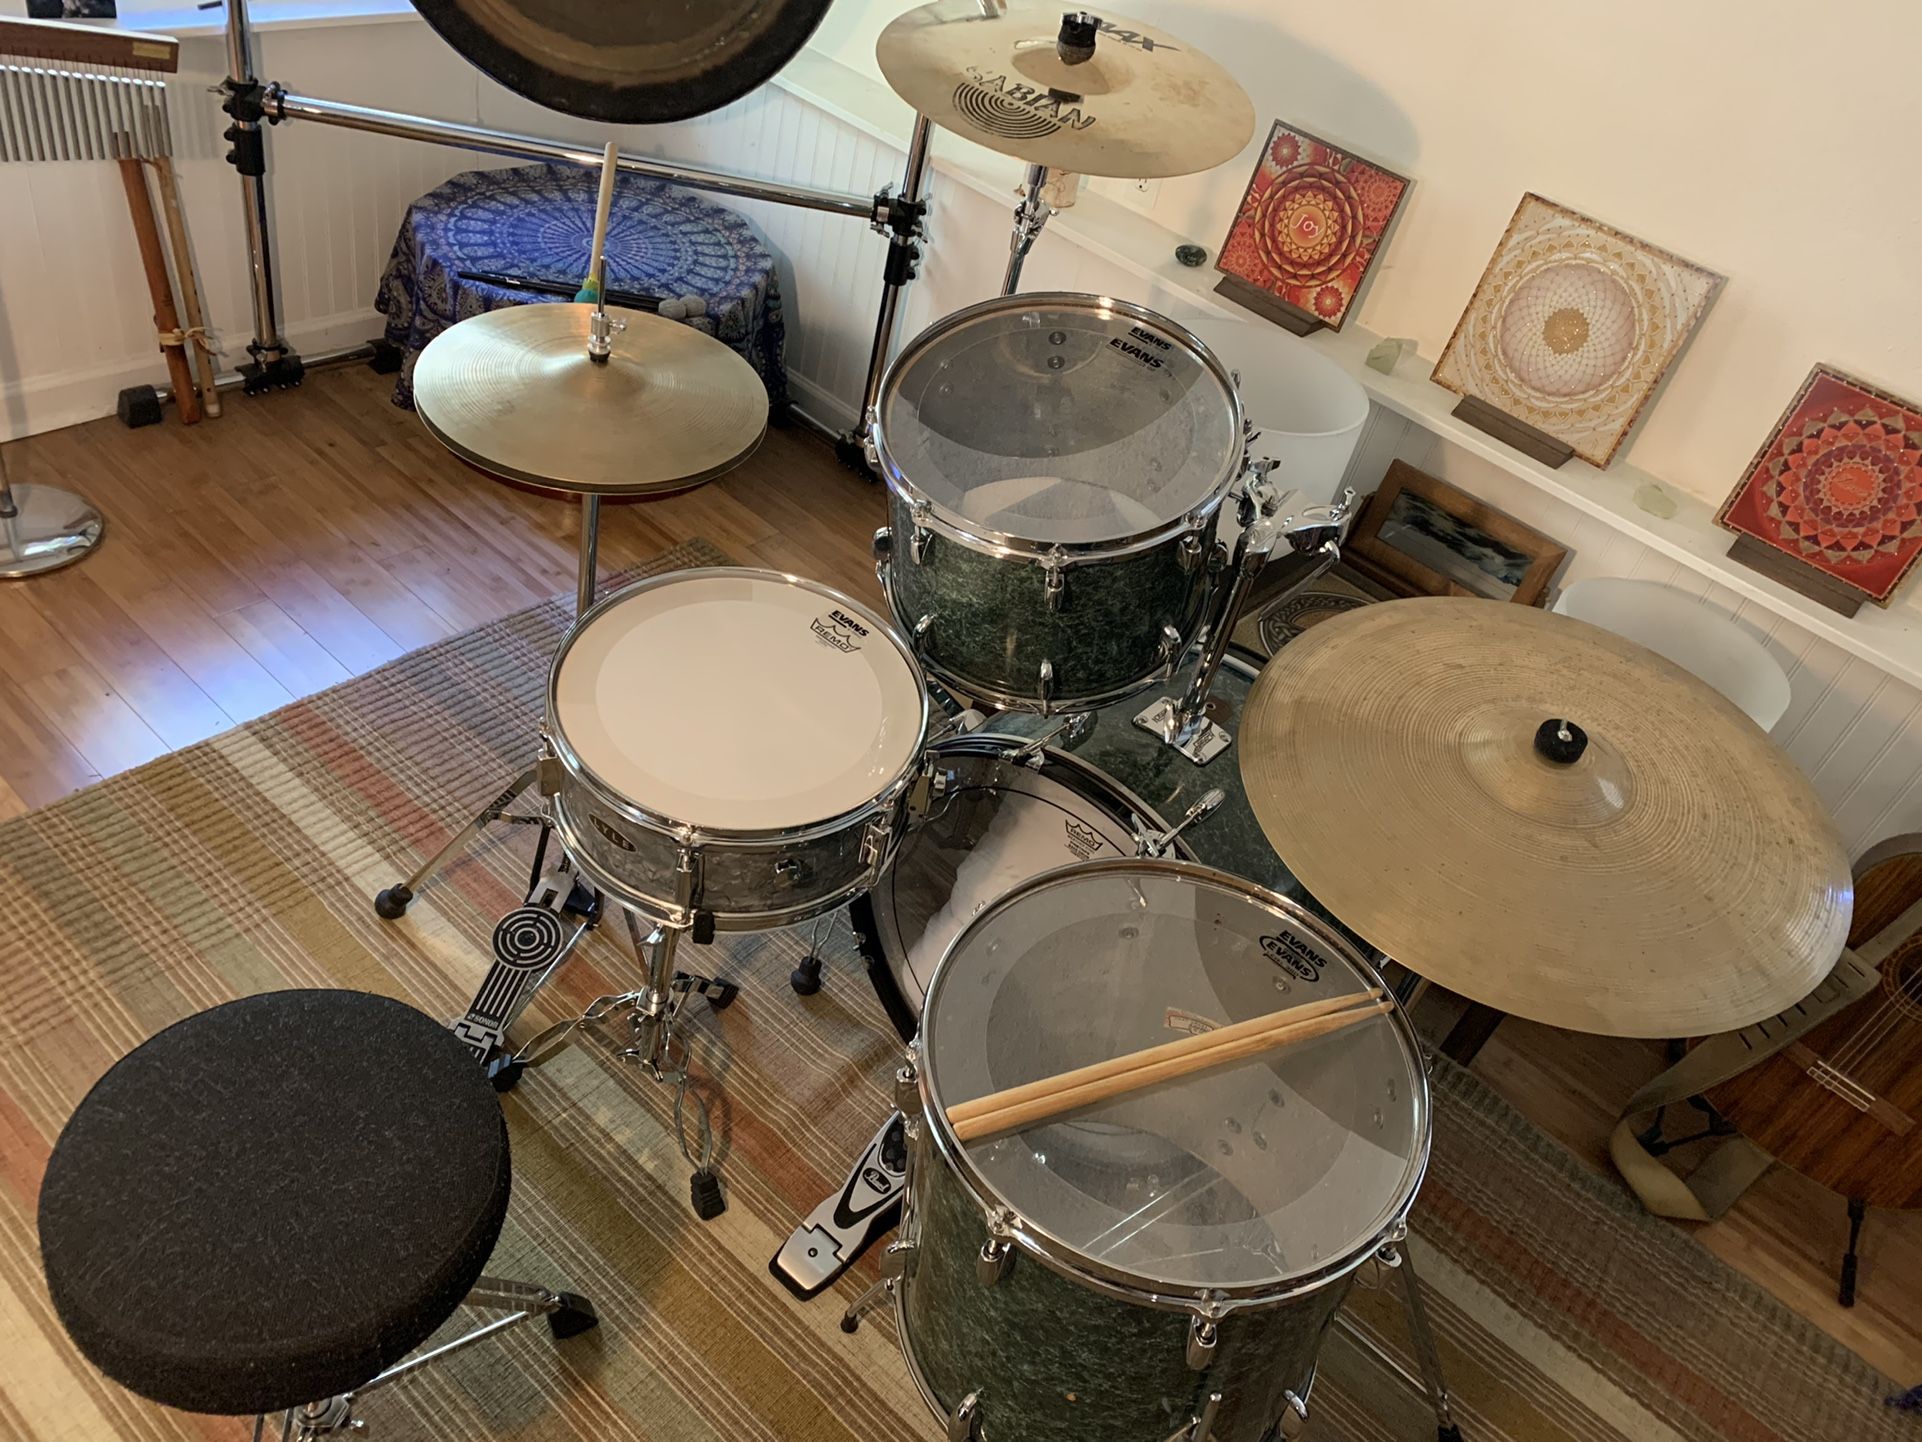 70’s Gretsch Drum Set, 70’s Lyle Snare Drum, Nice Cymbals